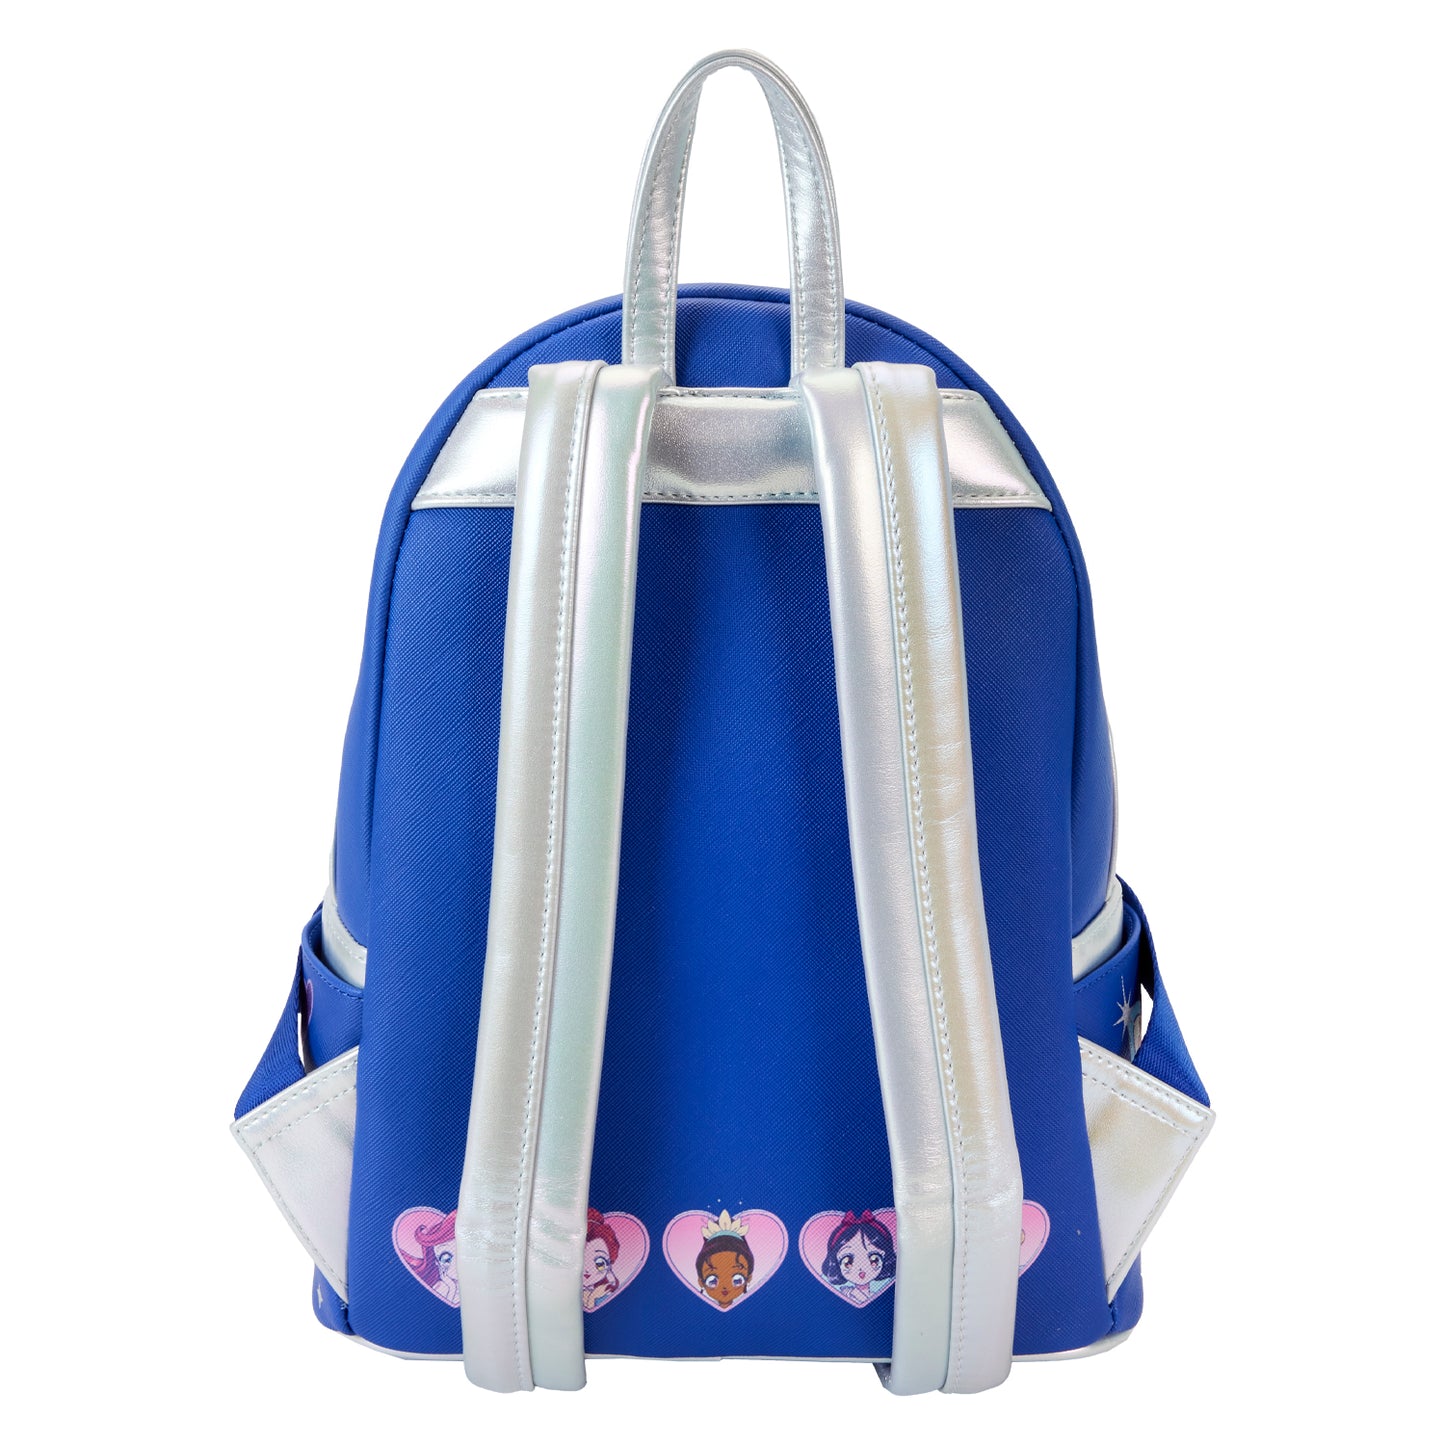 Disney Princess Manga Style Mini Backpack